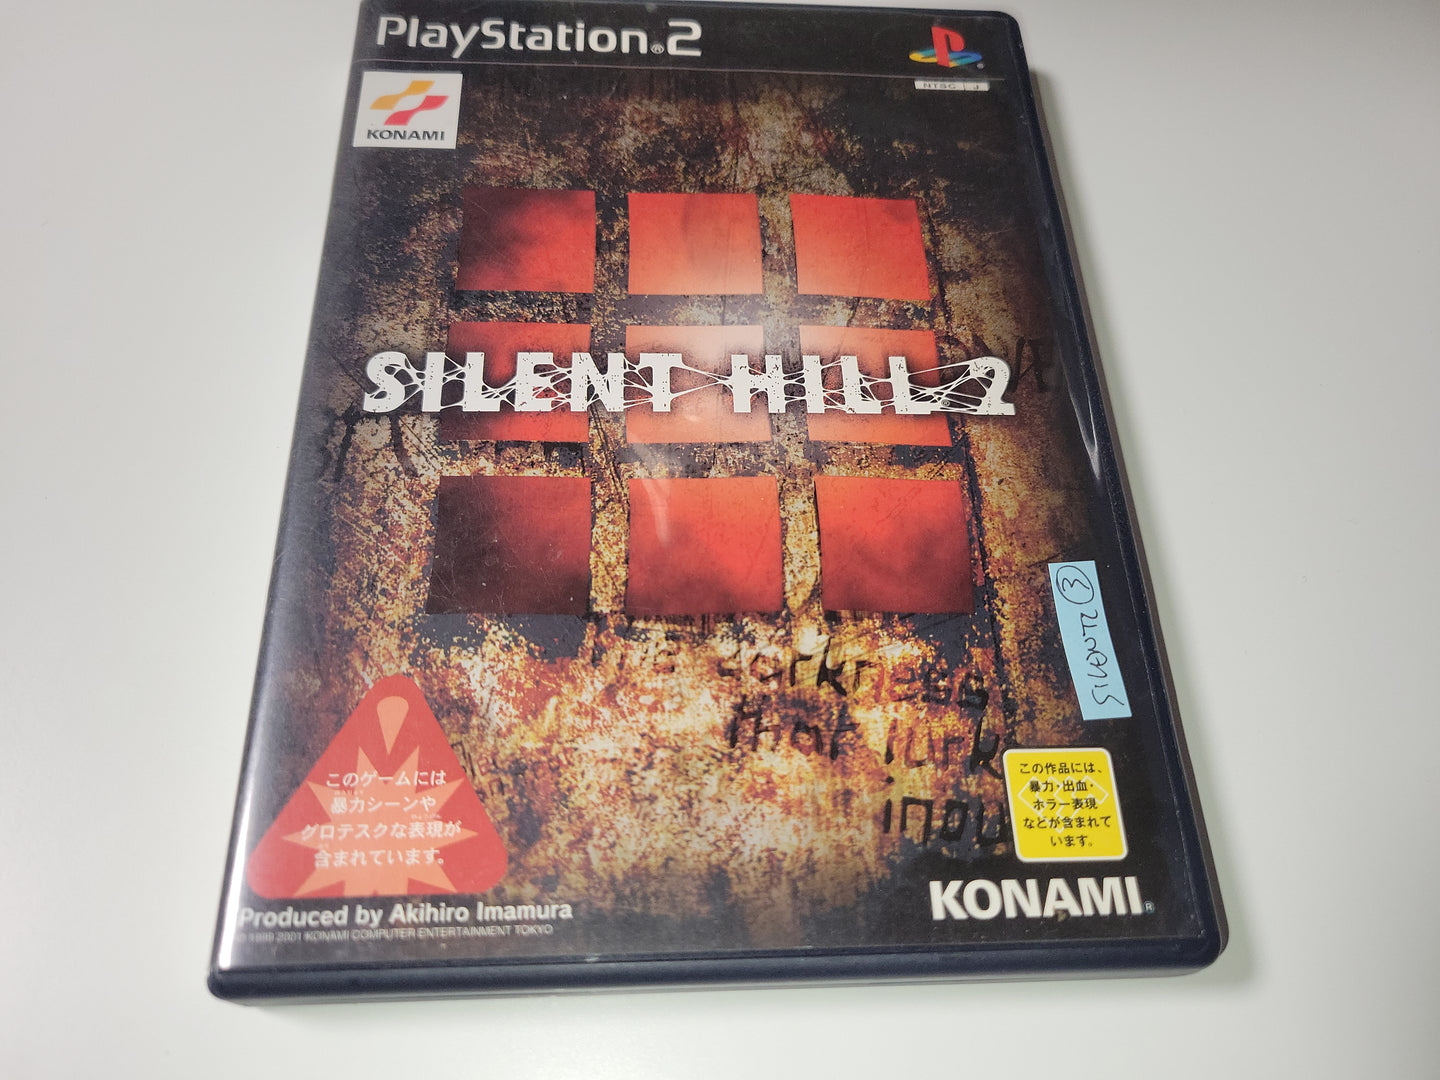 Silent Hill 2 - Sony playstation 2